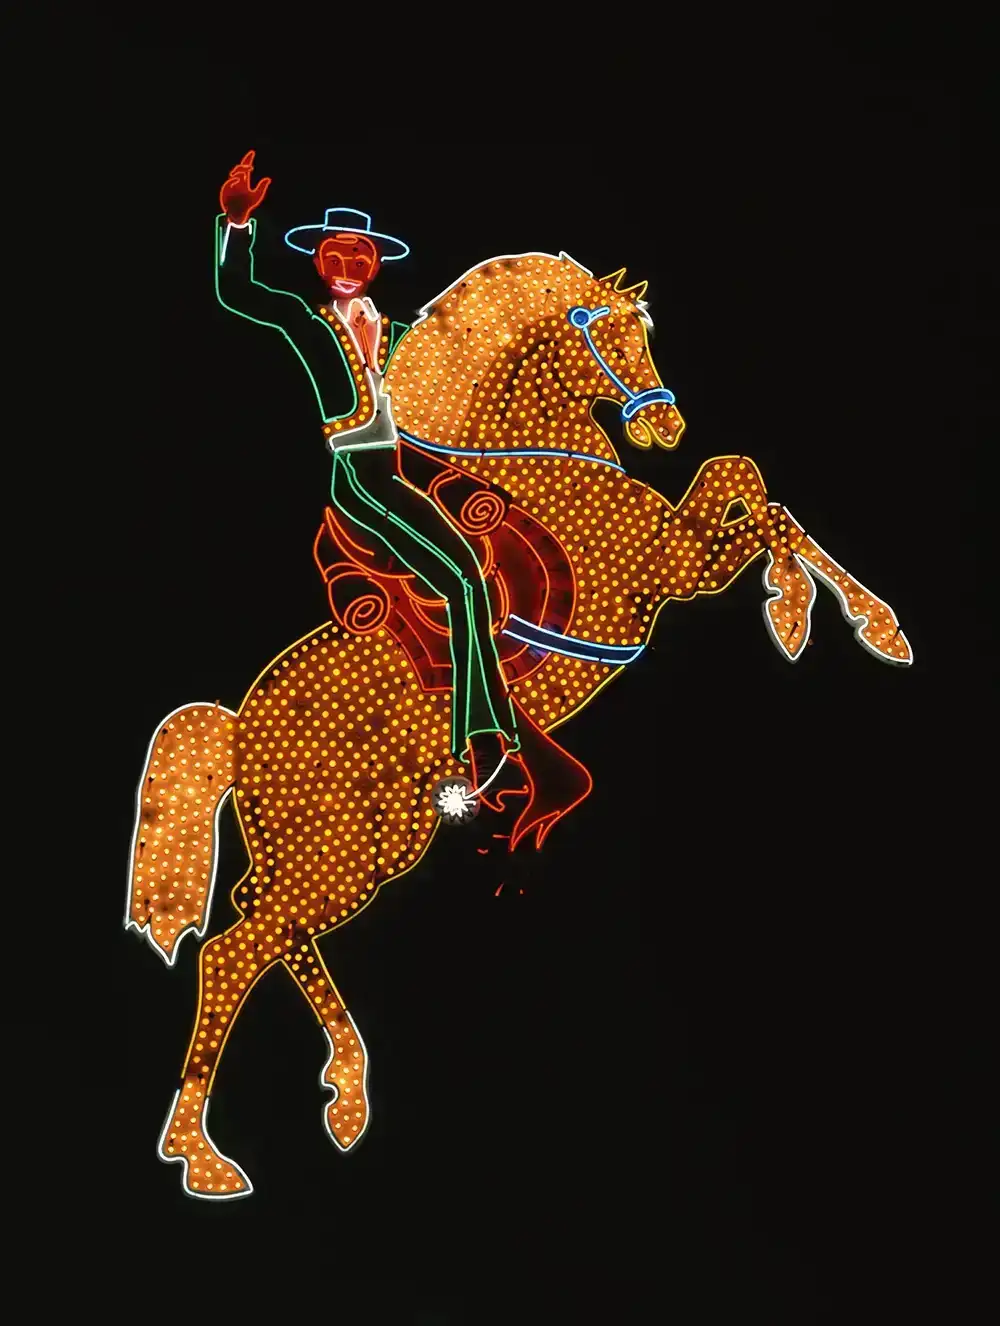 Image of Hacienda Horse and Rider, historic neon sign, Las Vegas, Nevada